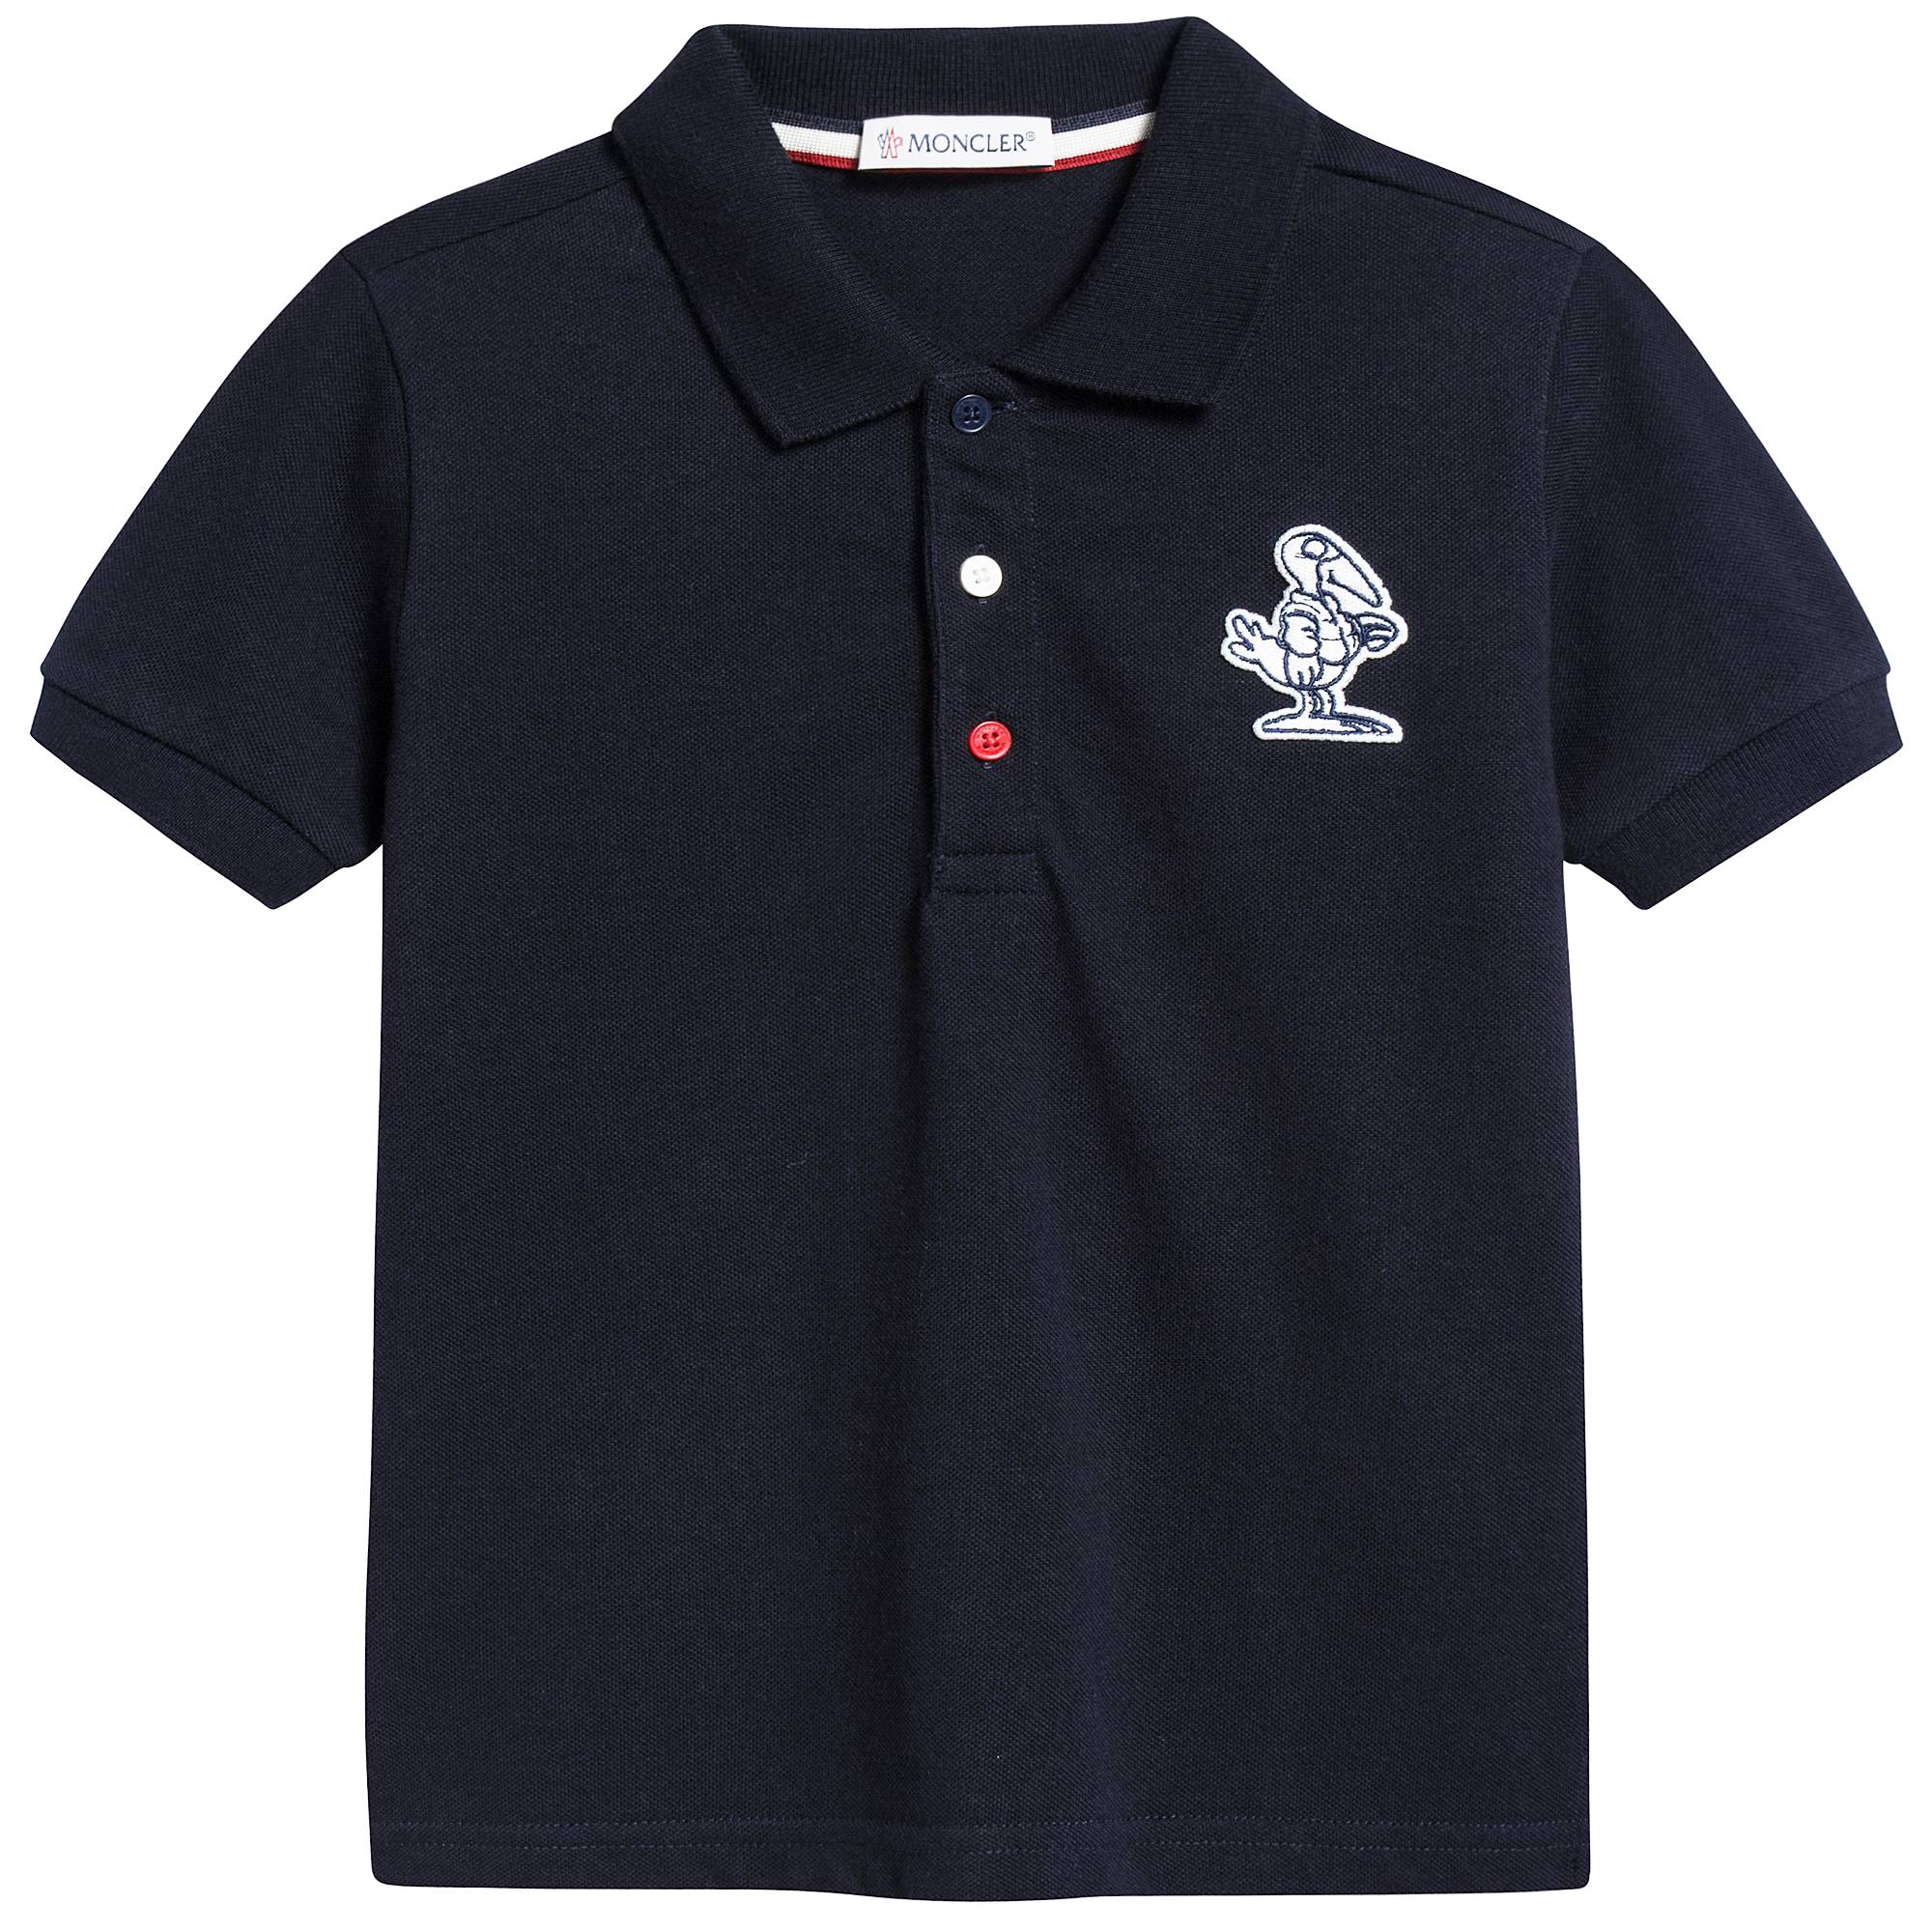 Boys Navy Blue Polo Shirt